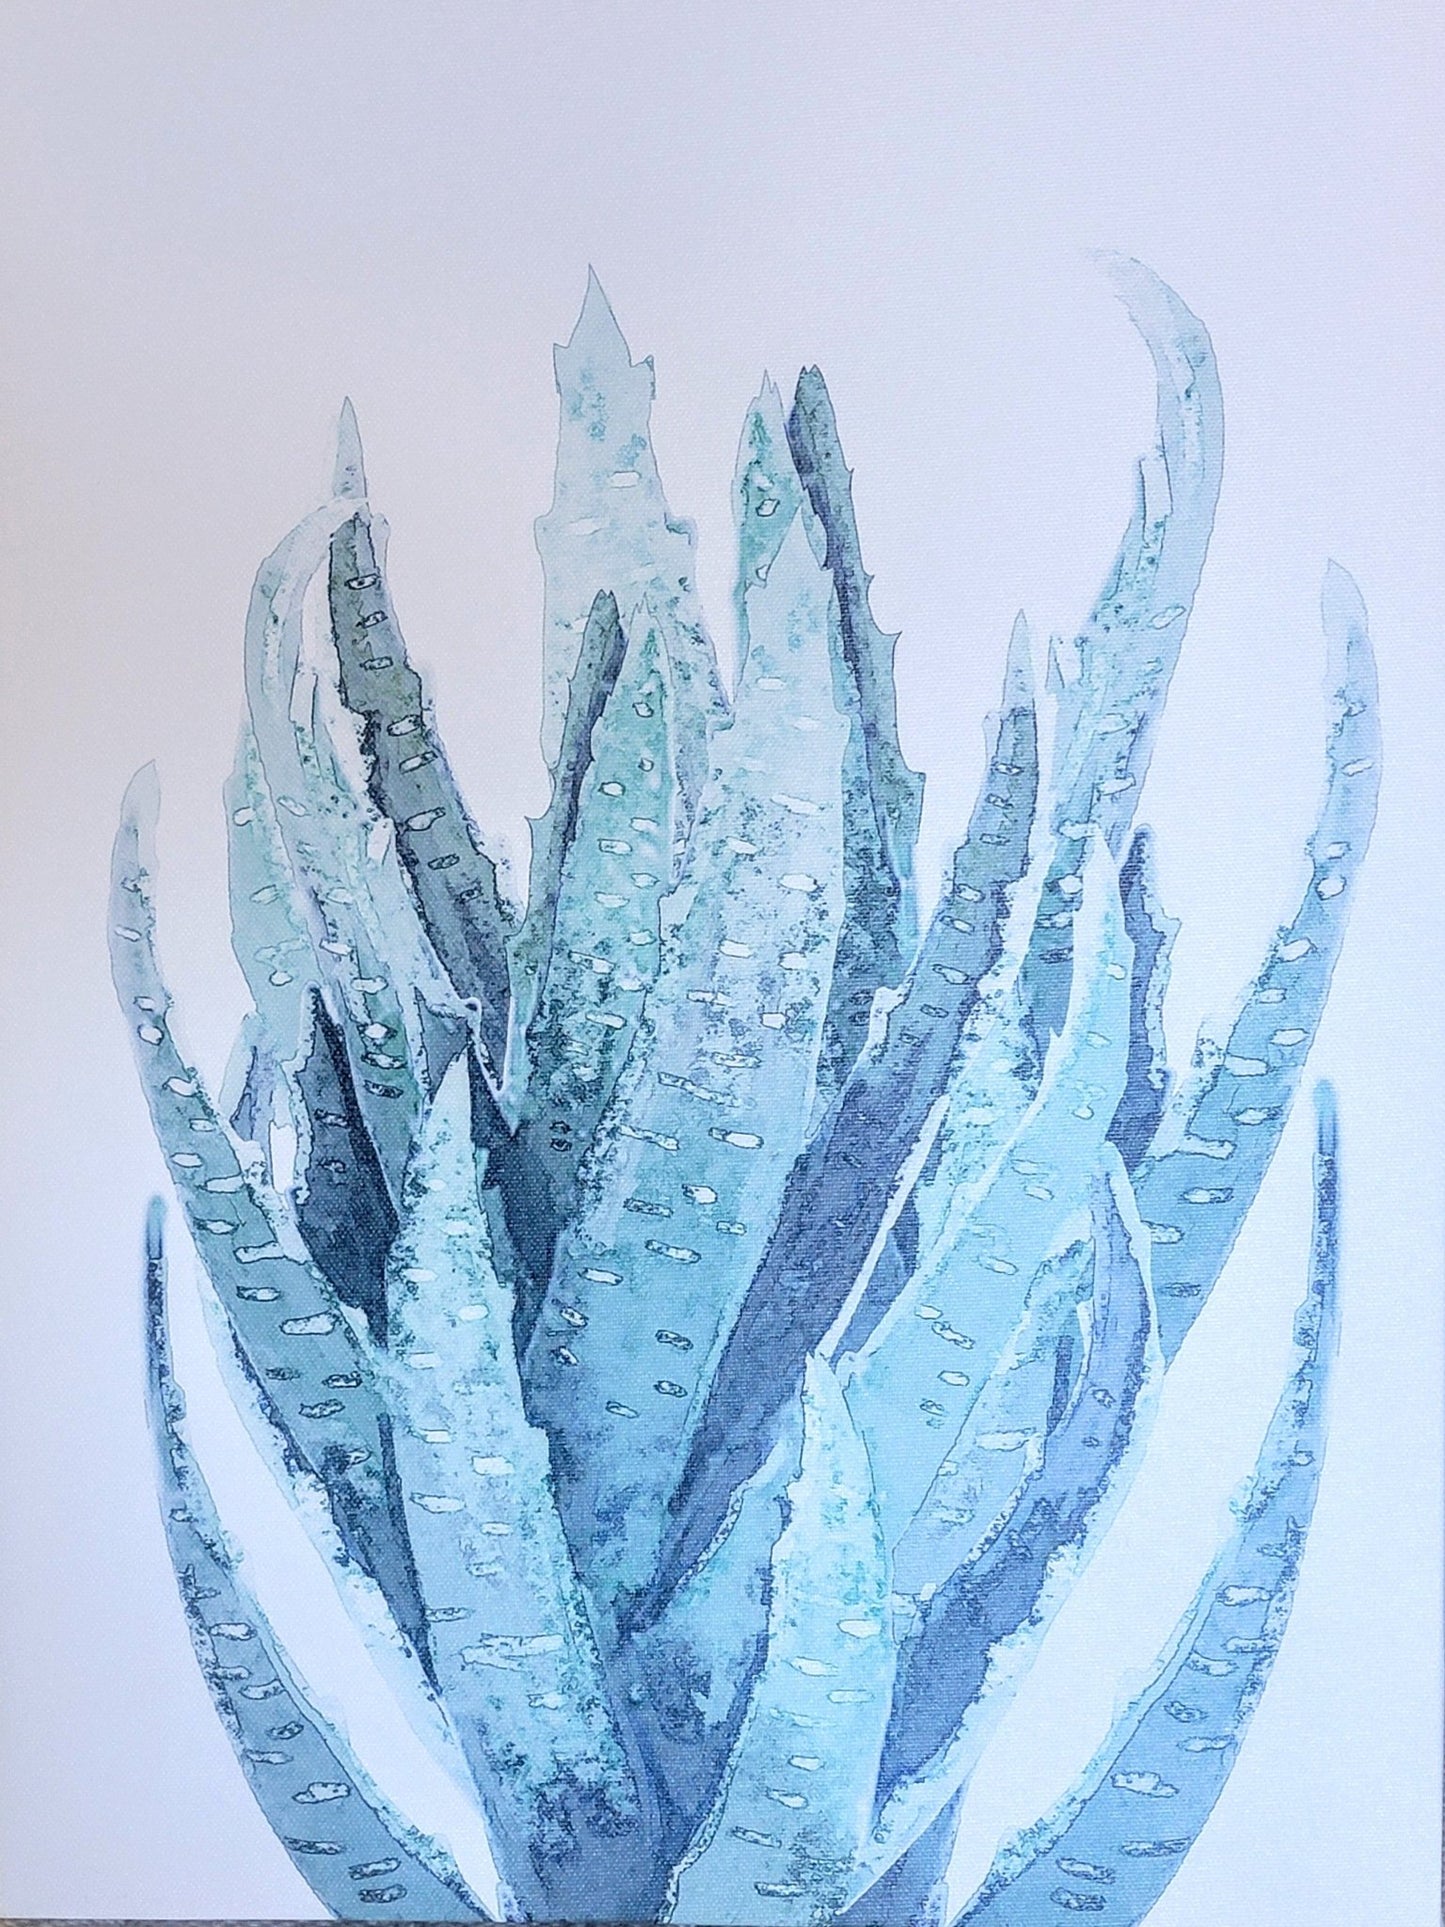 Aloe/Agave Wall Art - Smash's Stashes